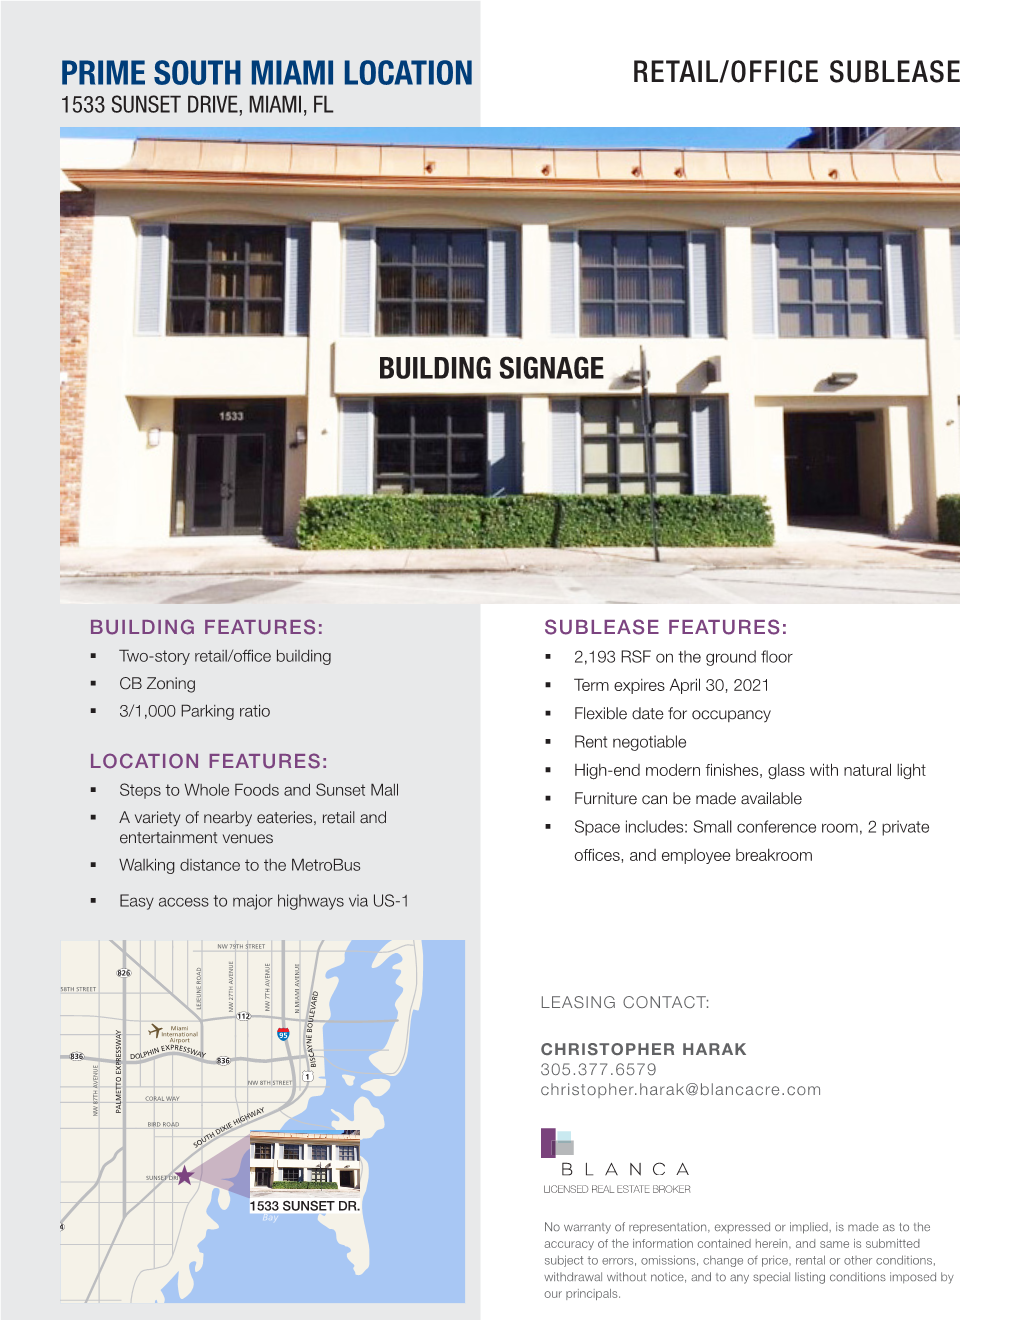 Prime South Miami Location Retail/Office Sublease 1533 Sunset Drive, Miami, Fl